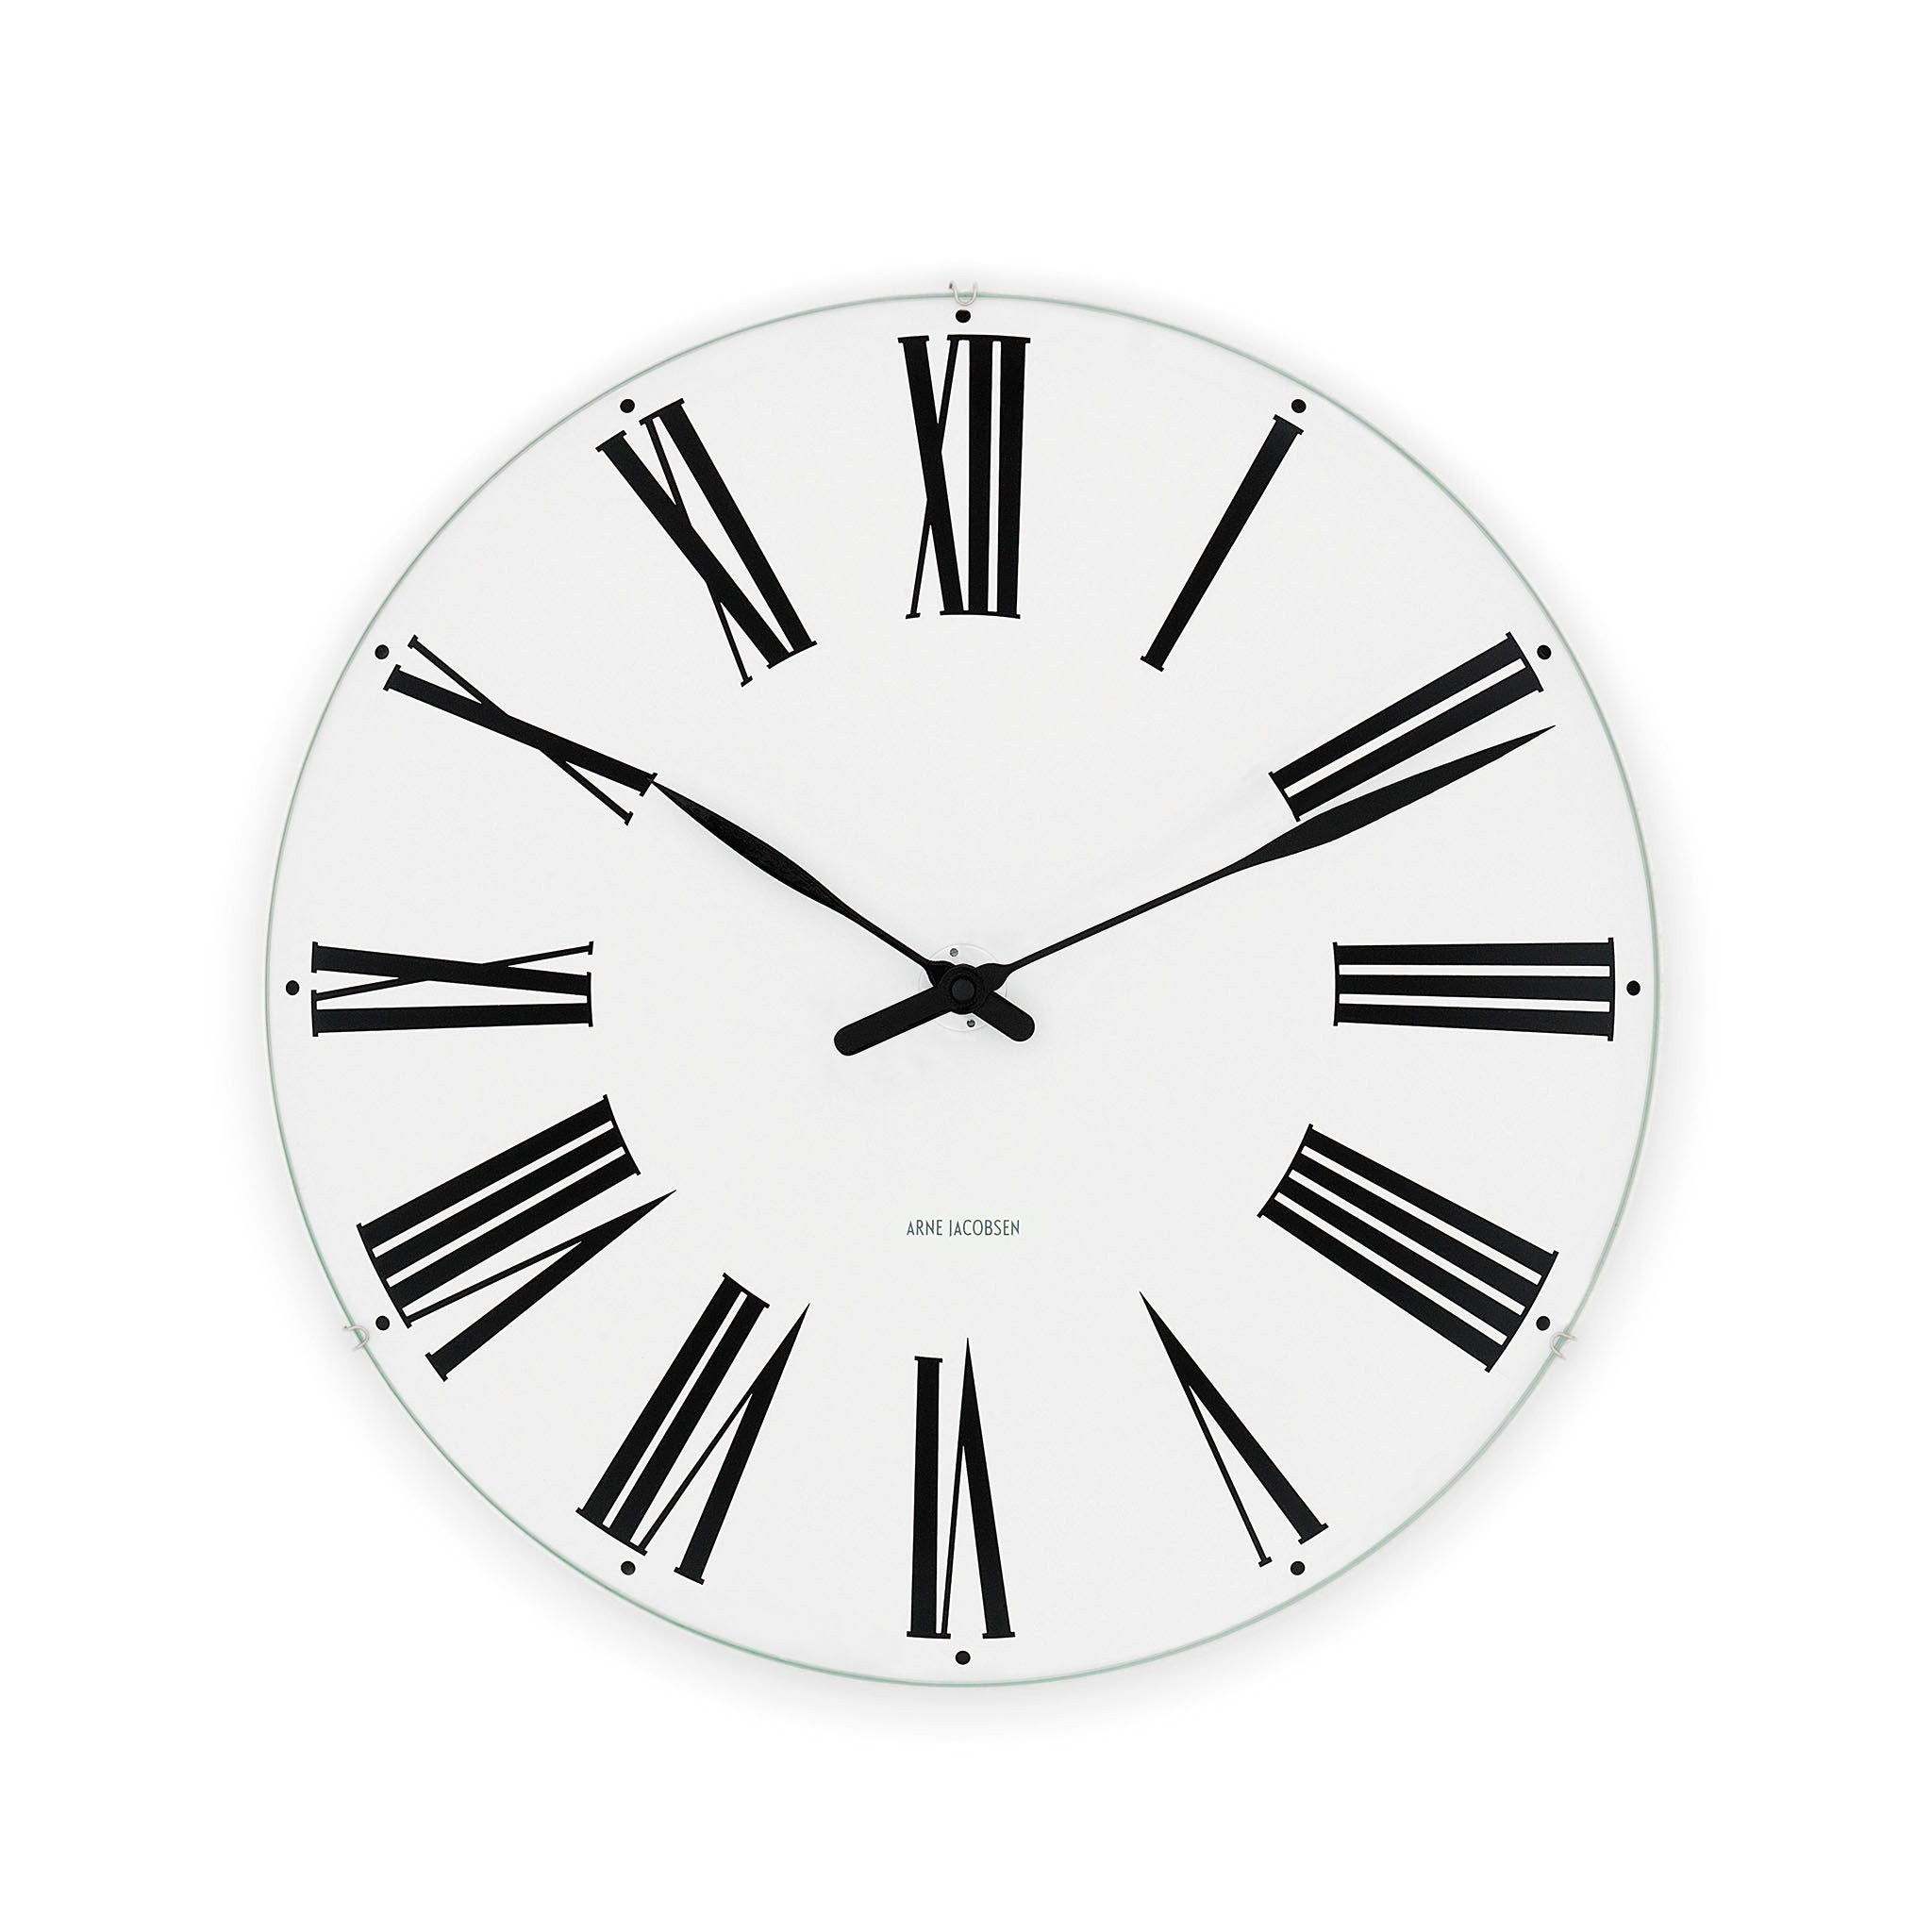 Arne Jacobsen Roman Wall Clock, 11.4" / 29 cm